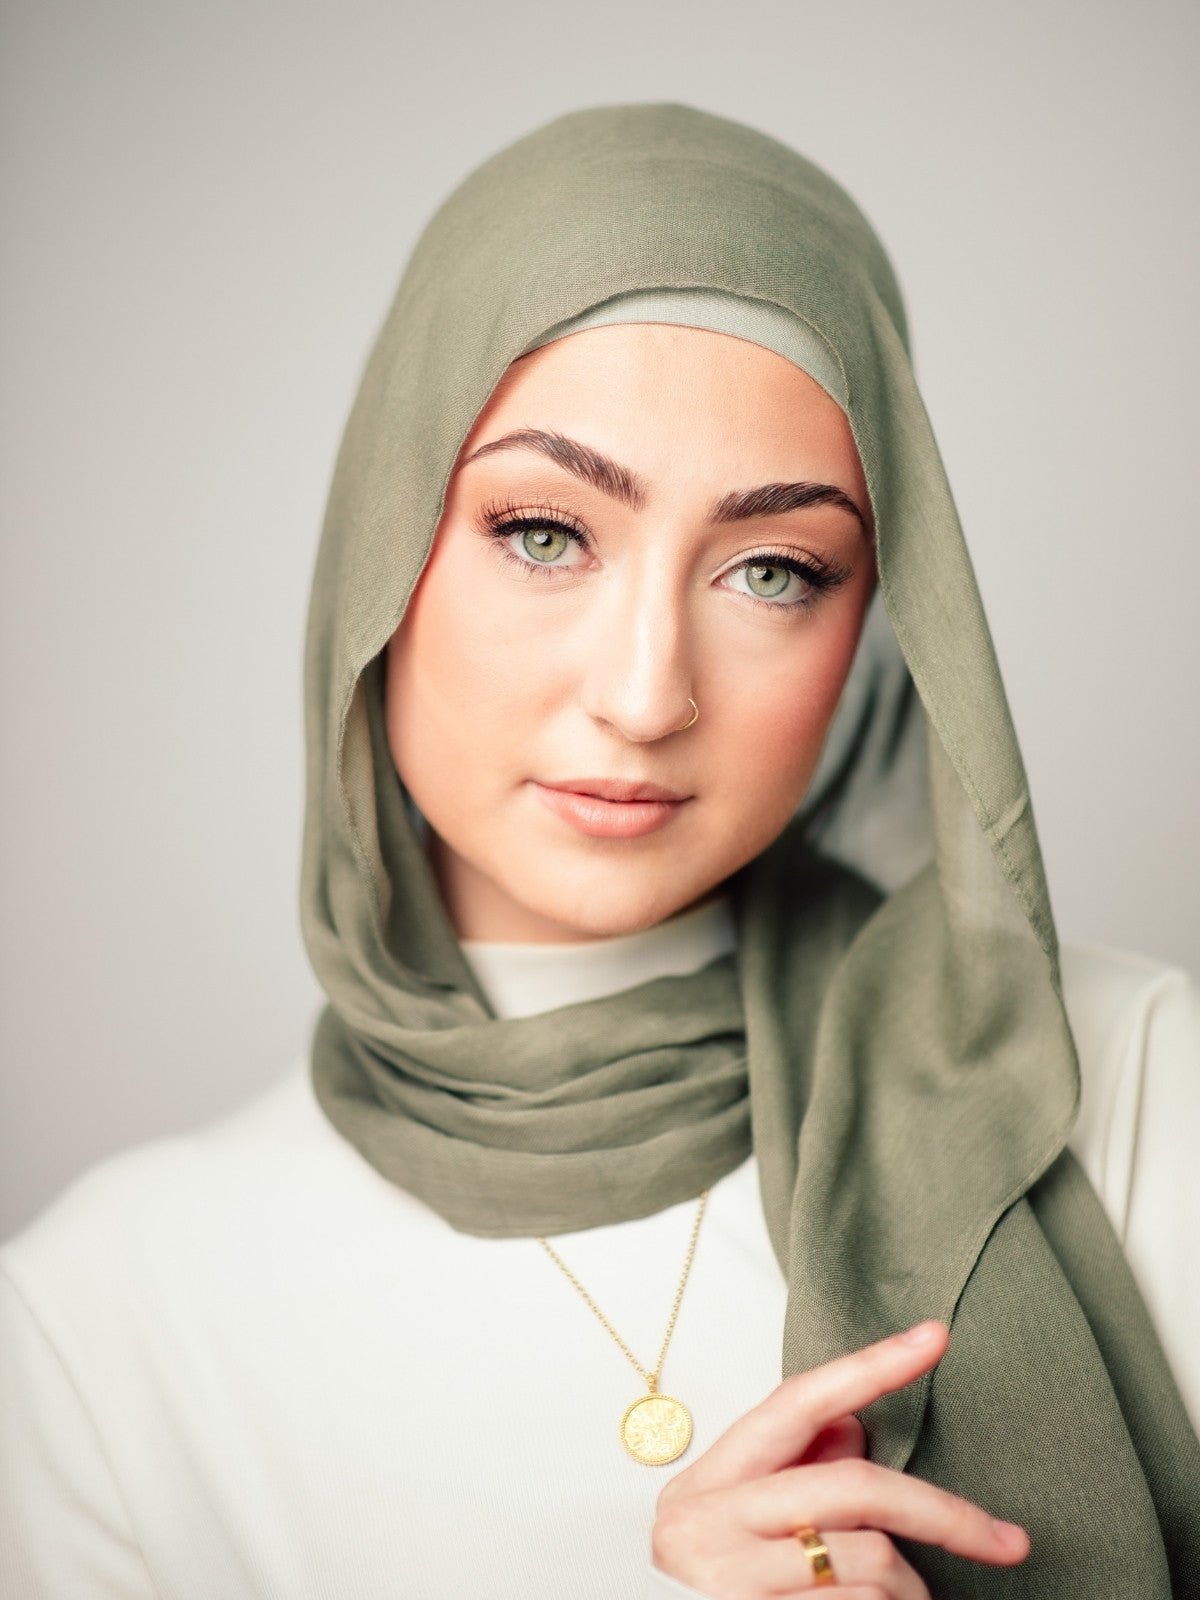 Lux Jersey hijab - Dark Red N19 – SarahCollectionn